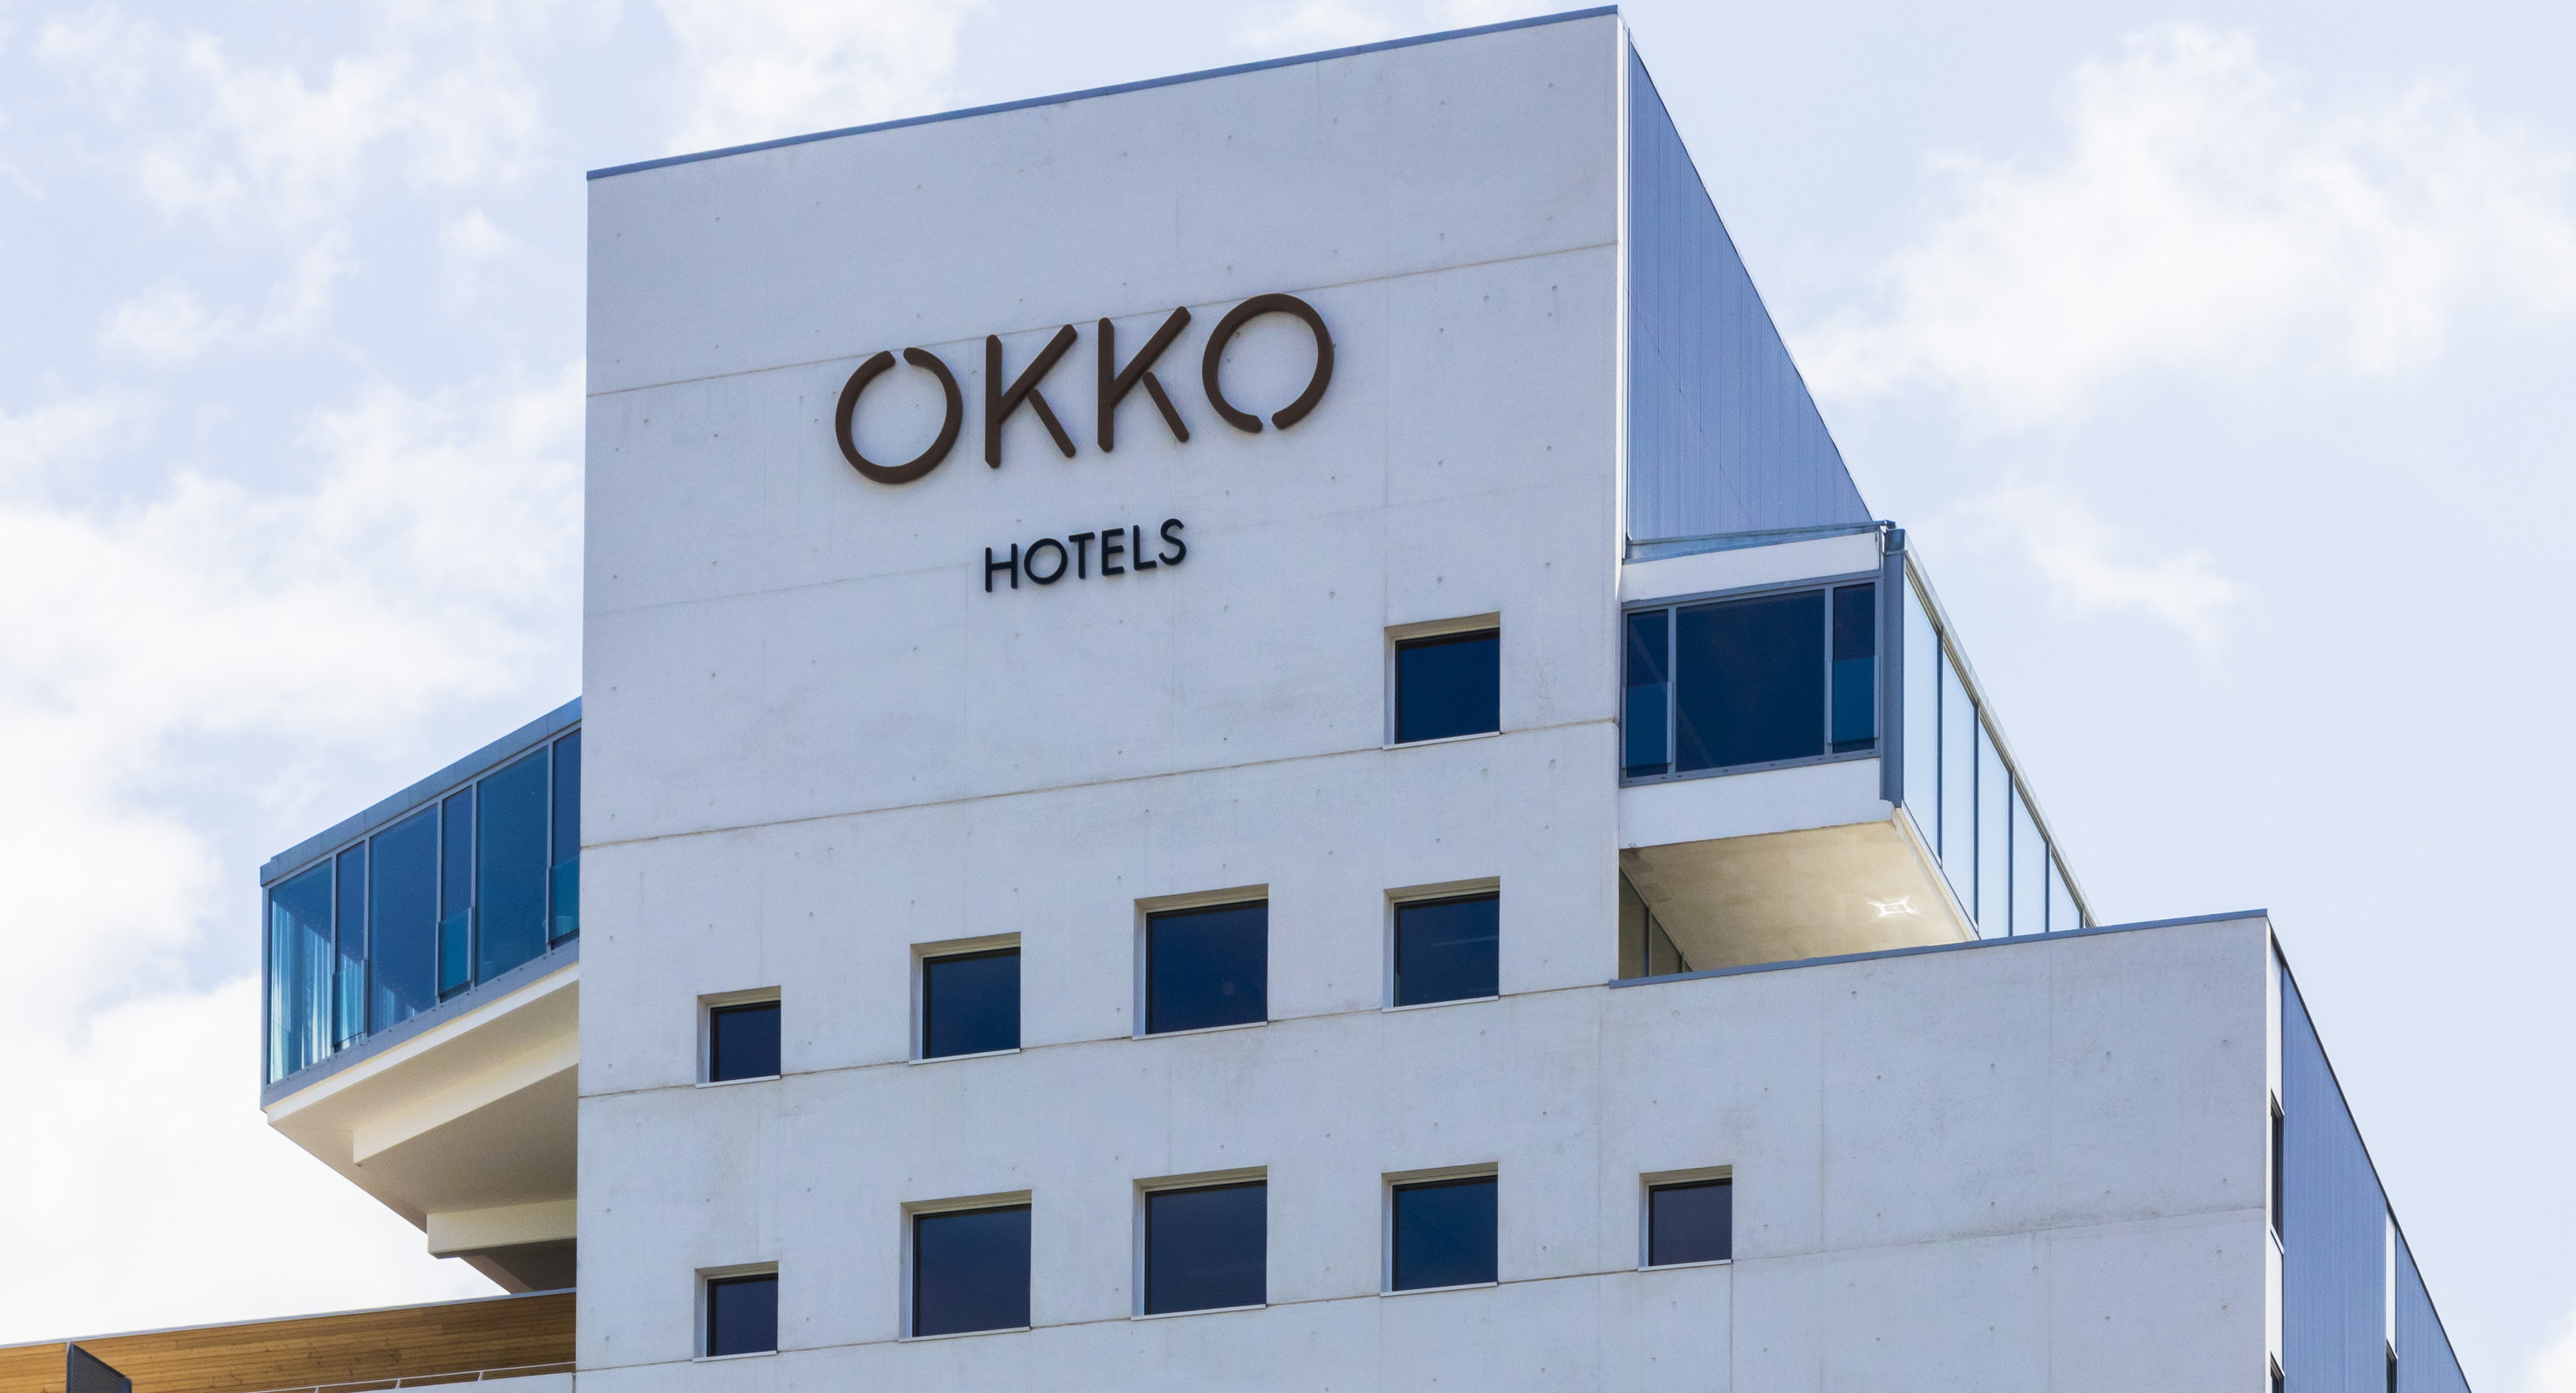 La façade de l'Okko Hotels, situé non loin des arènes de Bayonne. ©Okko Hotels